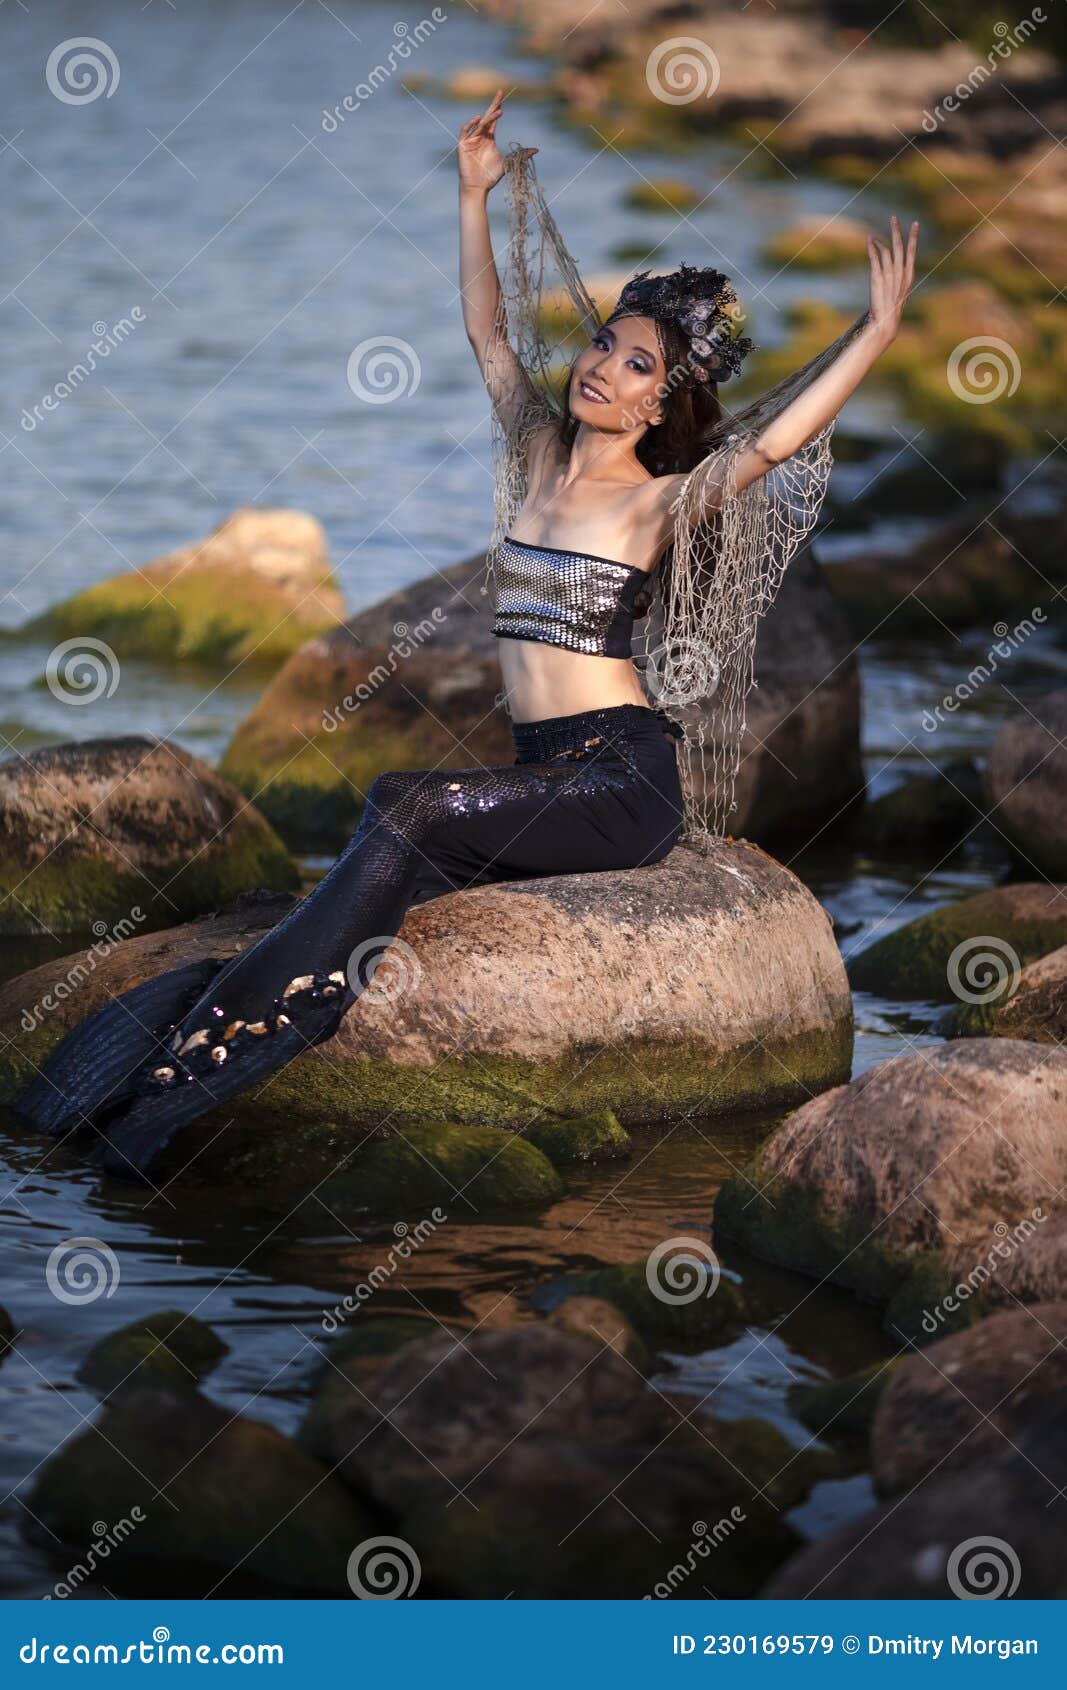 https://thumbs.dreamstime.com/z/asian-mermaid-net-sea-coast-rocks-wearing-seashell-decorated-crown-black-shiny-tail-sexy-body-covered-230169579.jpg